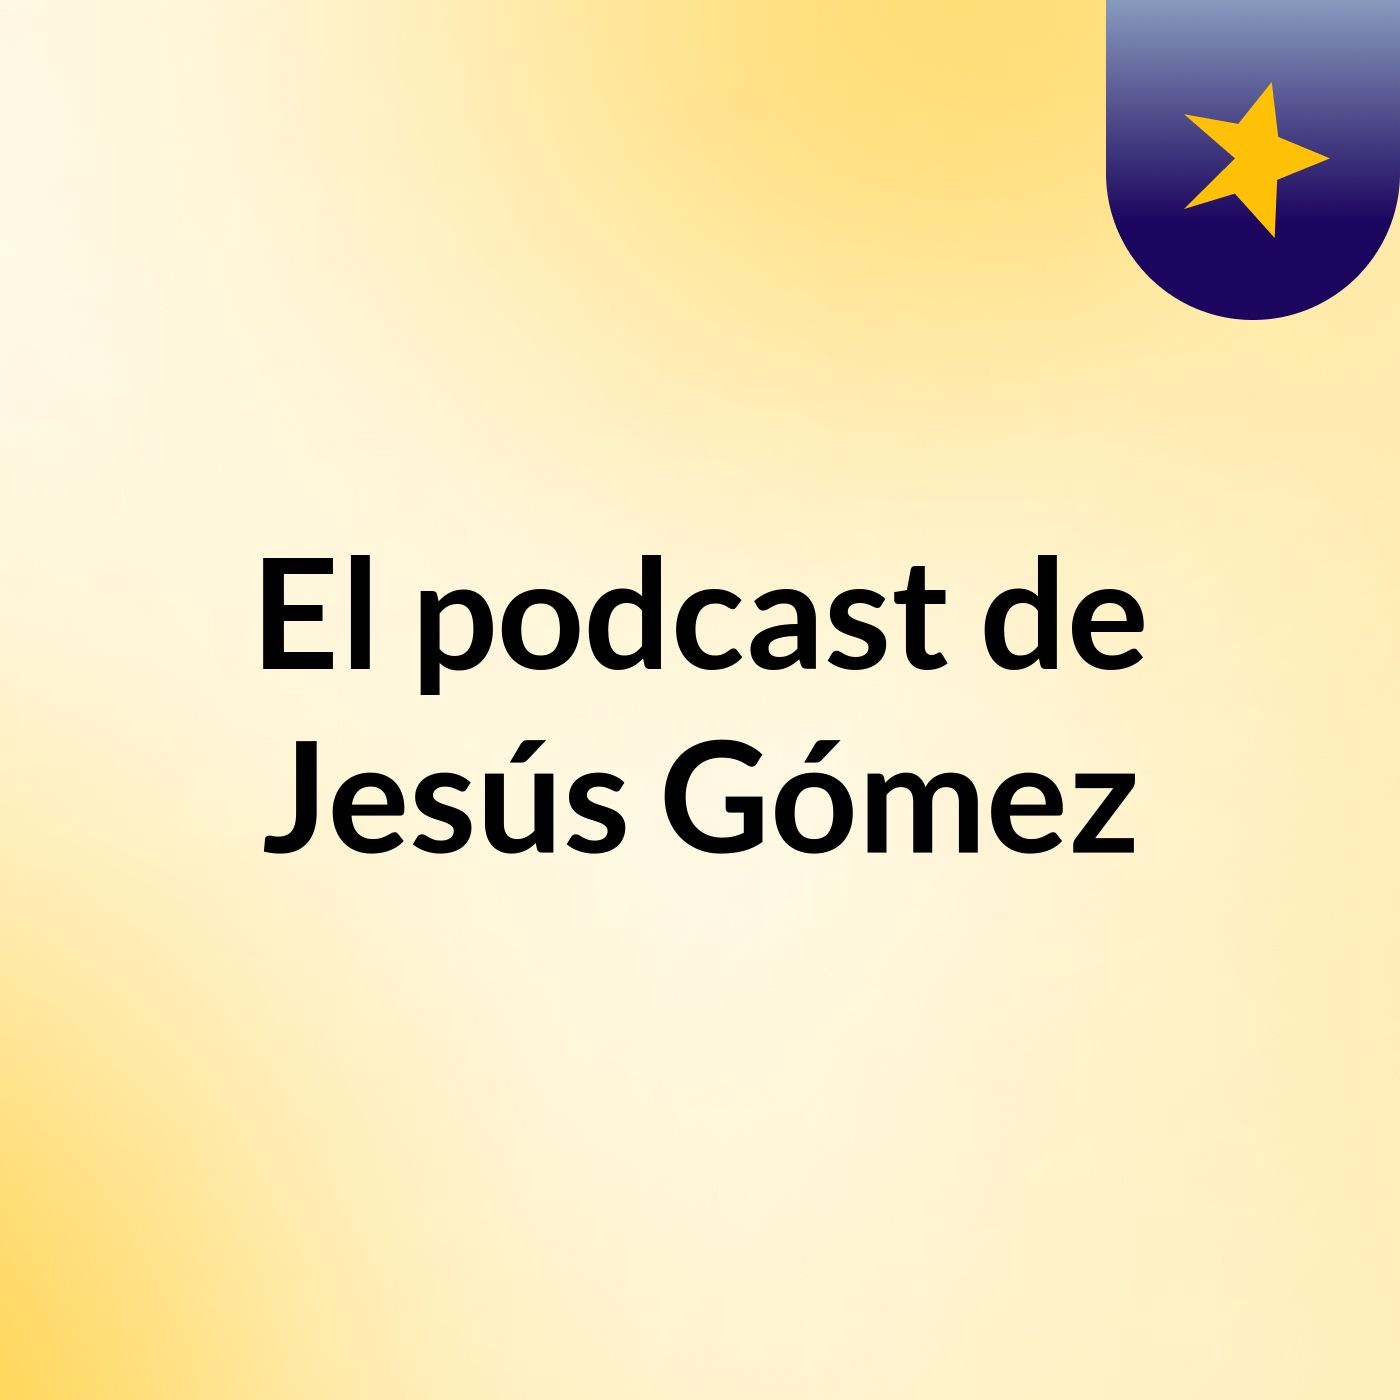 El podcast de Jesús Gómez